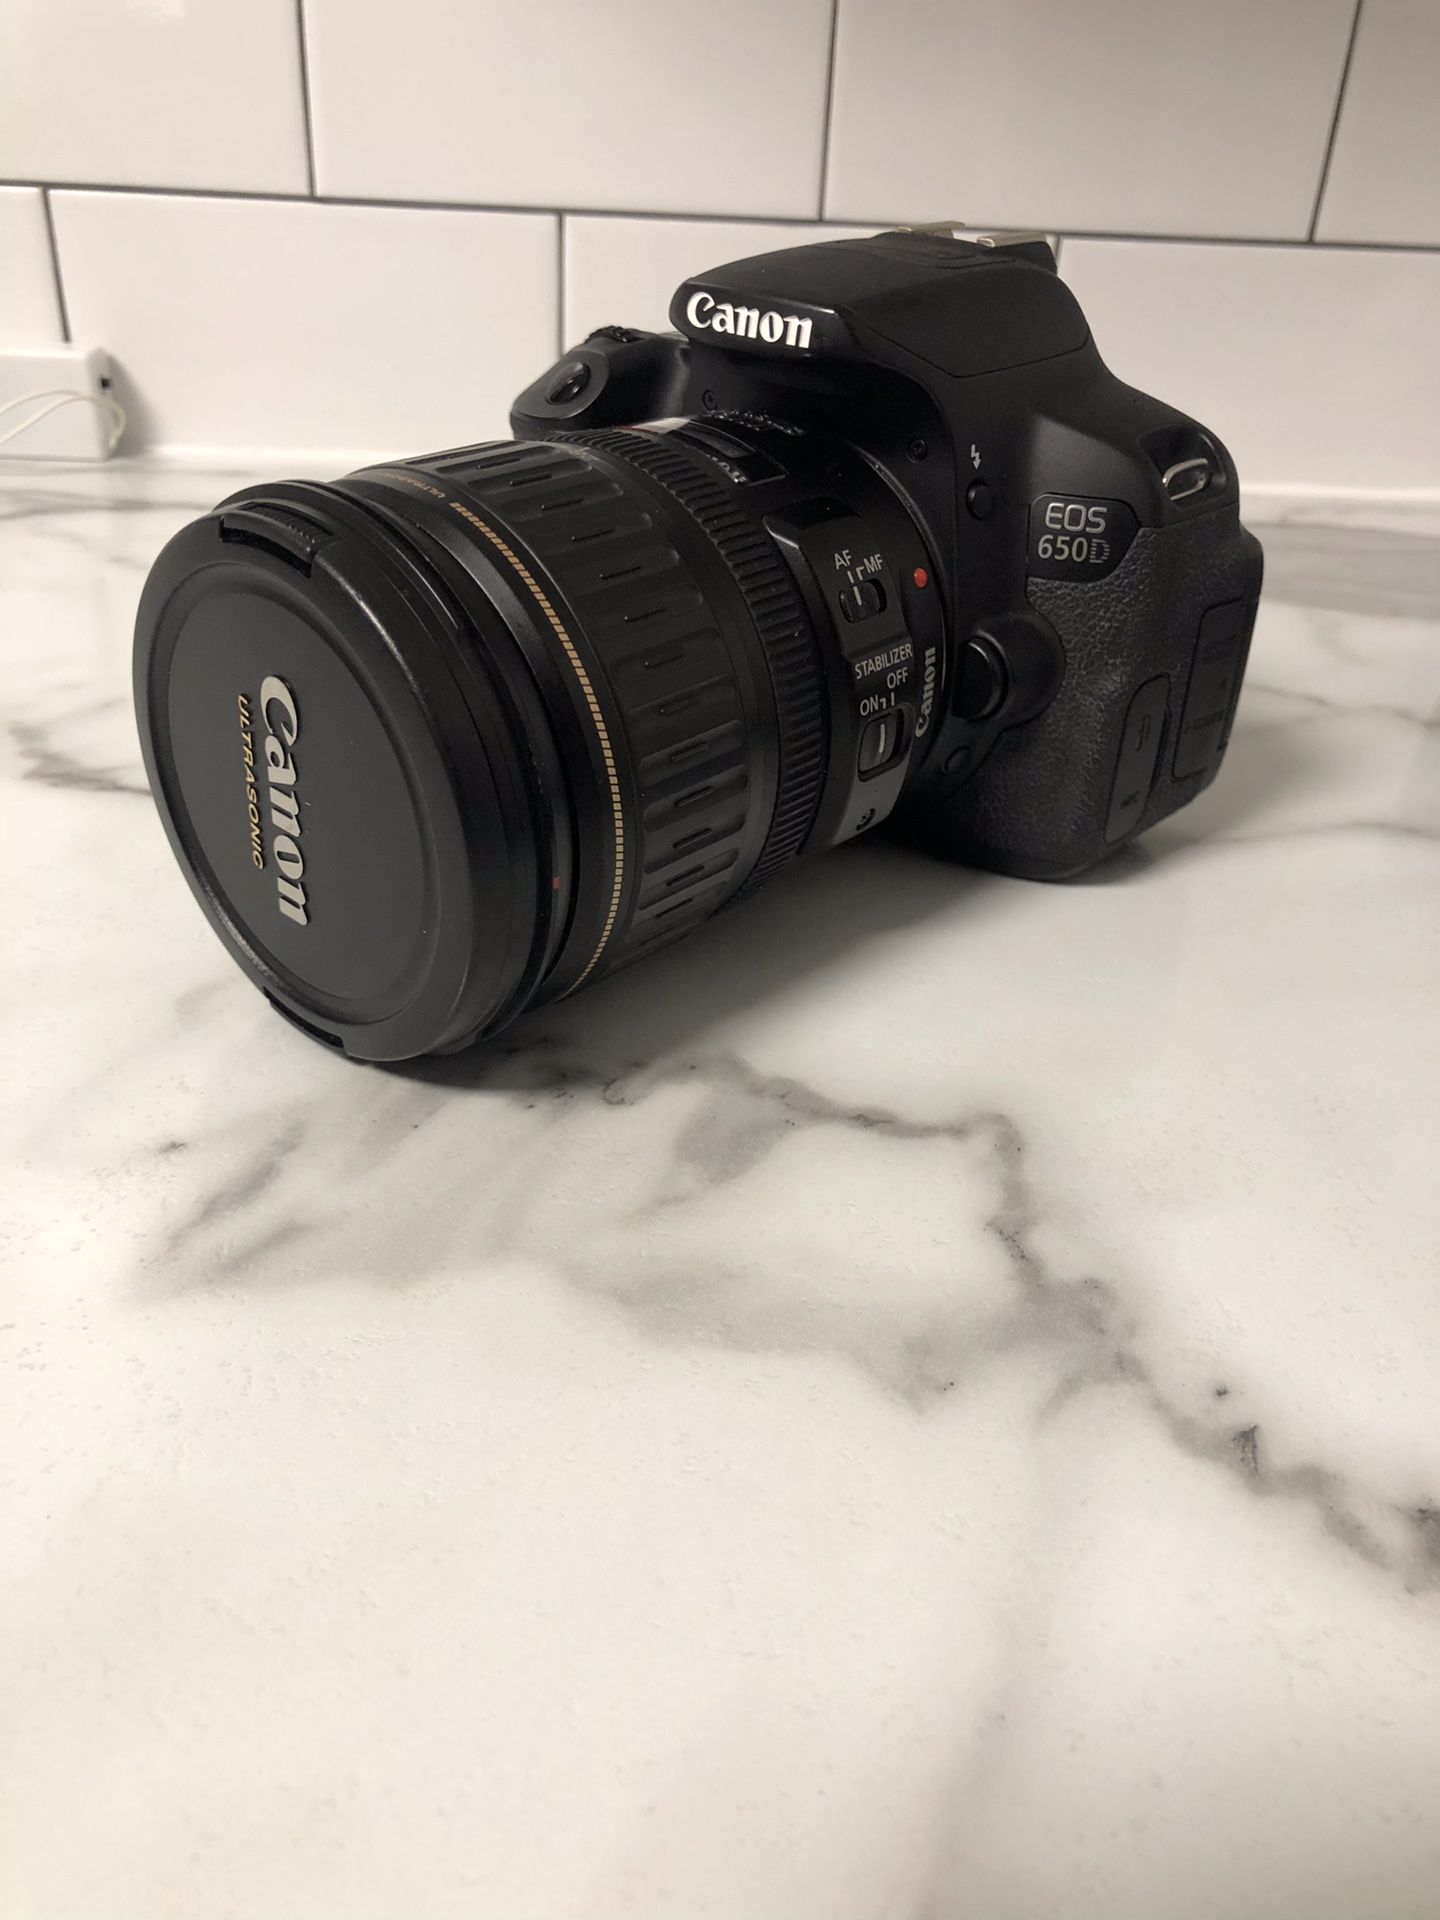 Canon 650D DSLR Camera